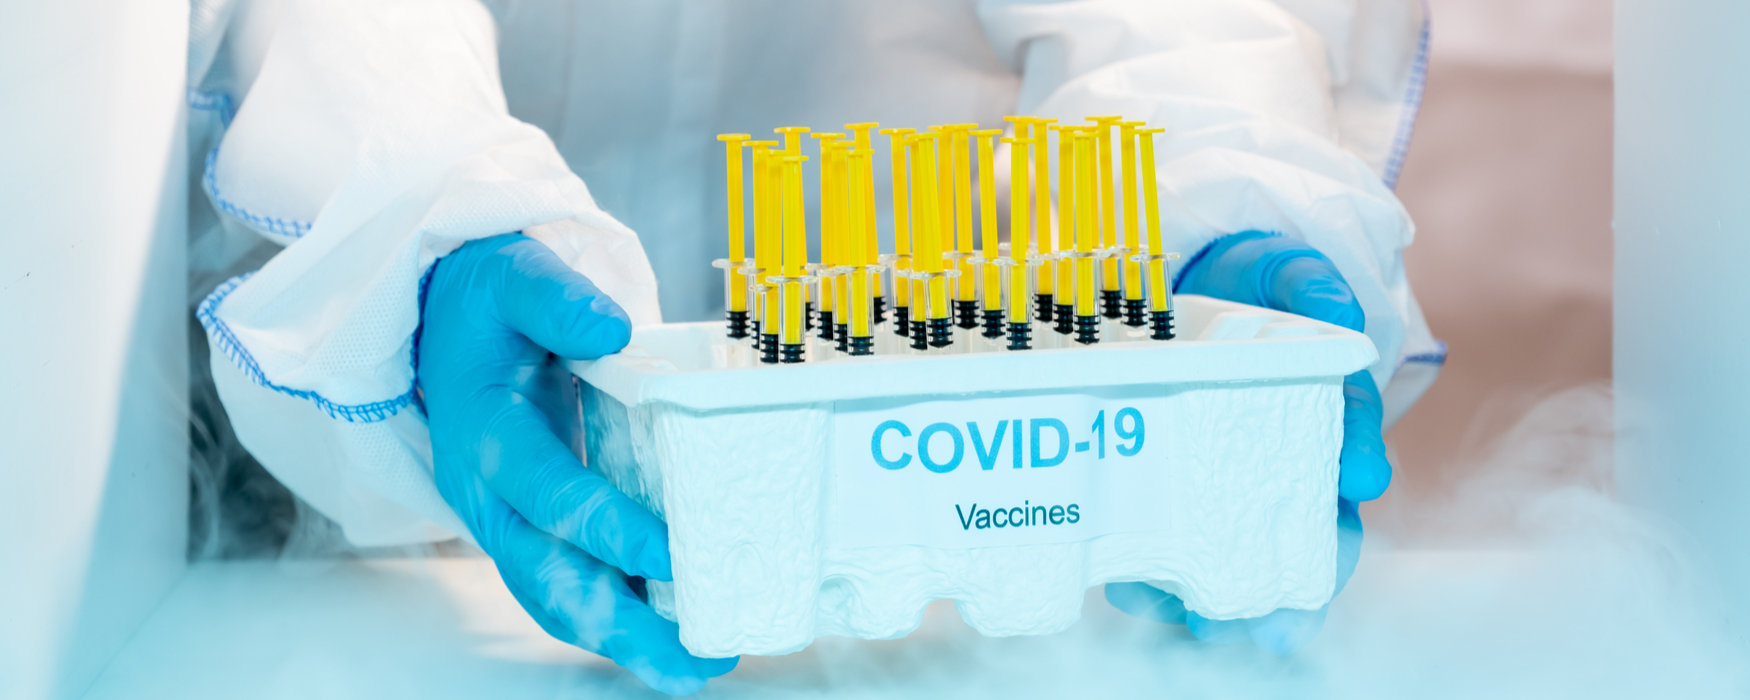 Tennesee covid vaccine freezers - covid 19 vaccine freezer - vaccine storage in Tennesee